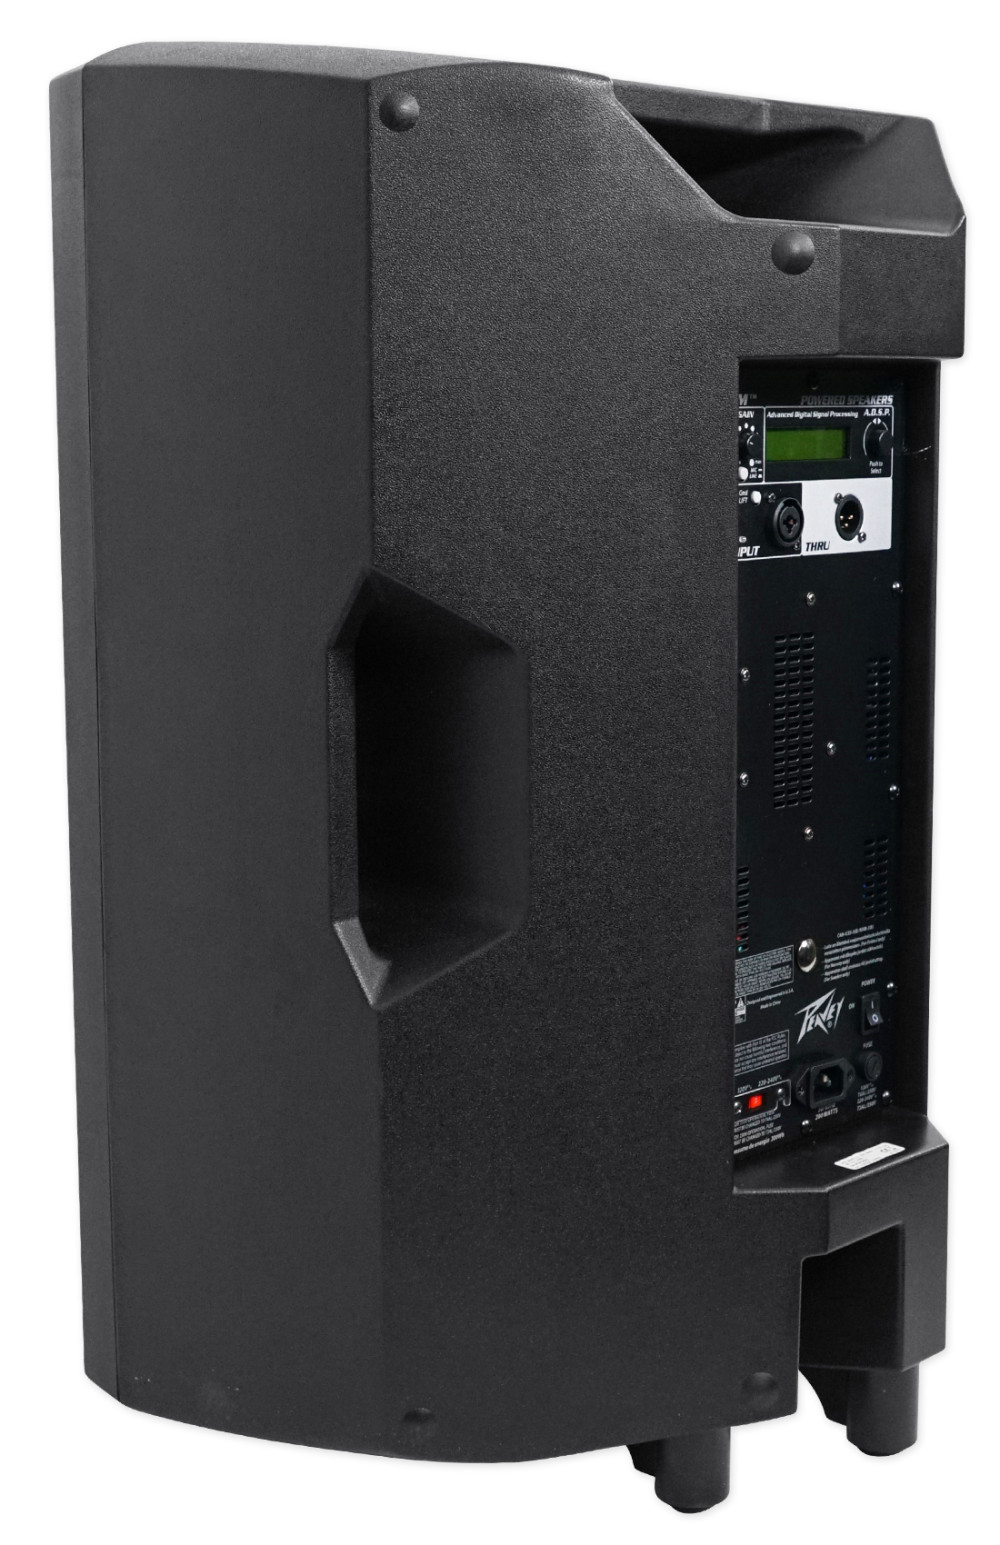 (2) Peavey DM 115 15" 1000w Powered Speakers+Wall Mounts For Restaurant/Bar/Cafe Audio Savings